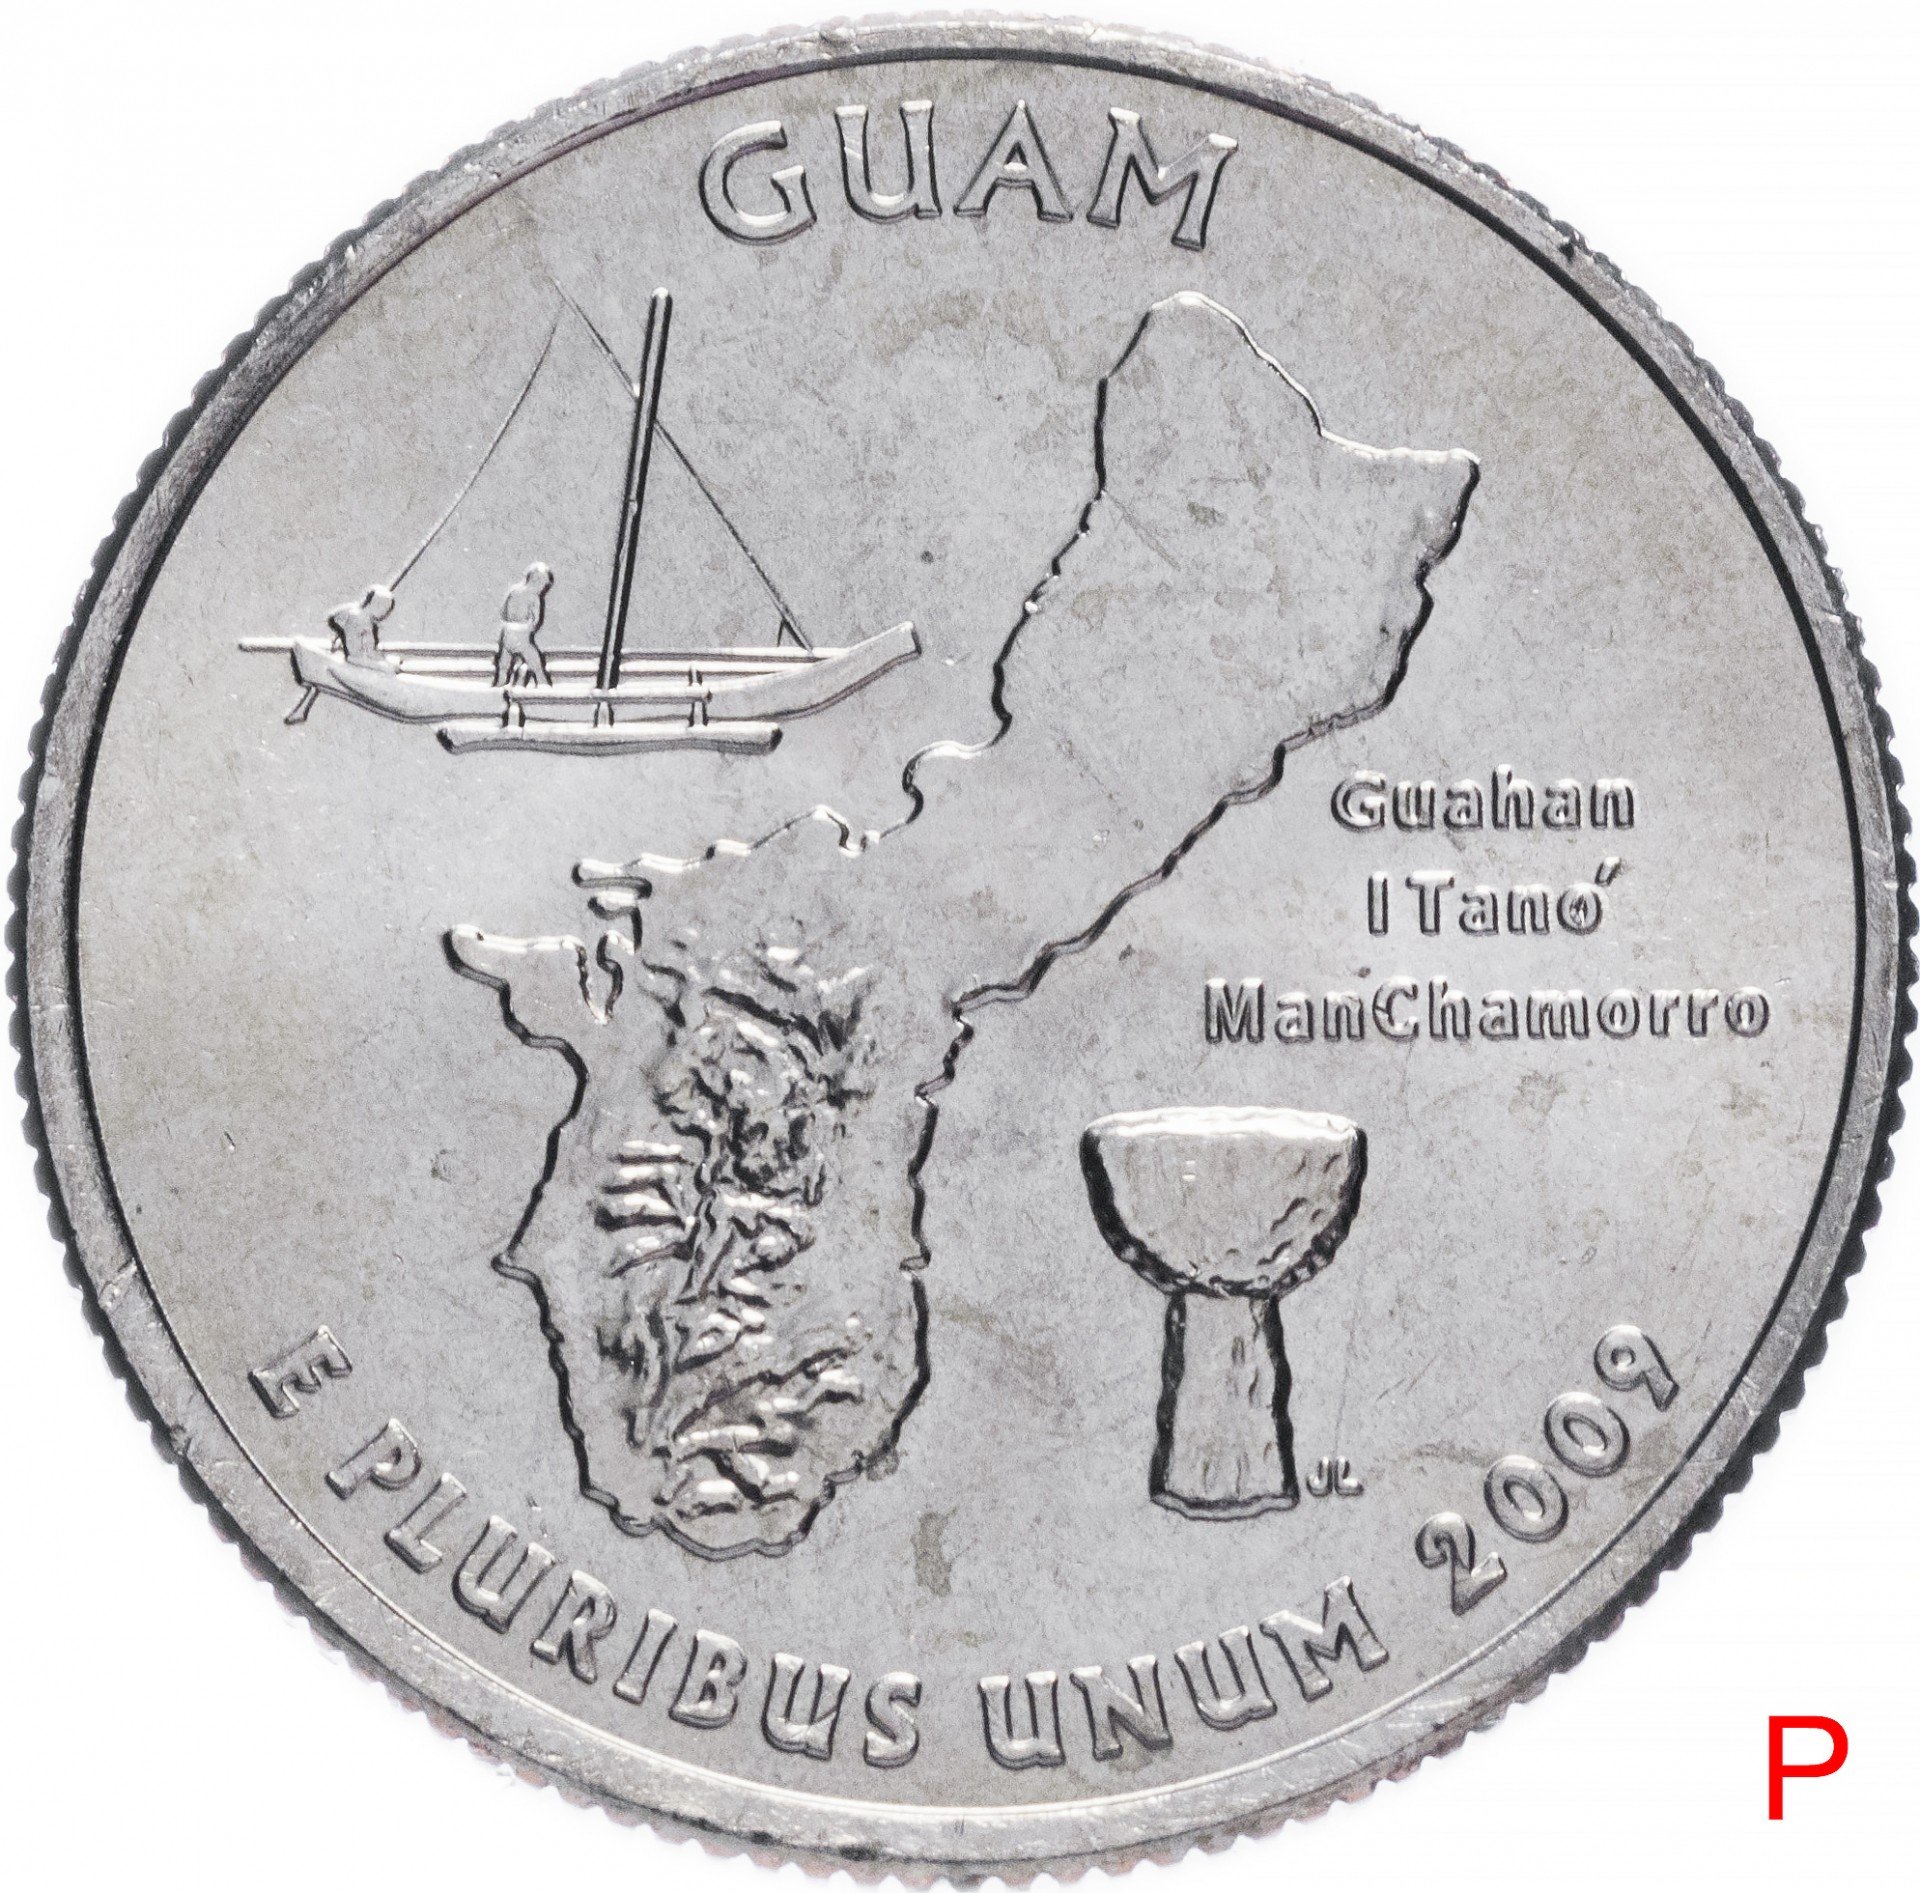 Us 1 25. 25 Центов 2009 Гуам. Памятная монета 25 центов 1/4 доллара квотер. 25 Центов США. 25 Центов США штаты.